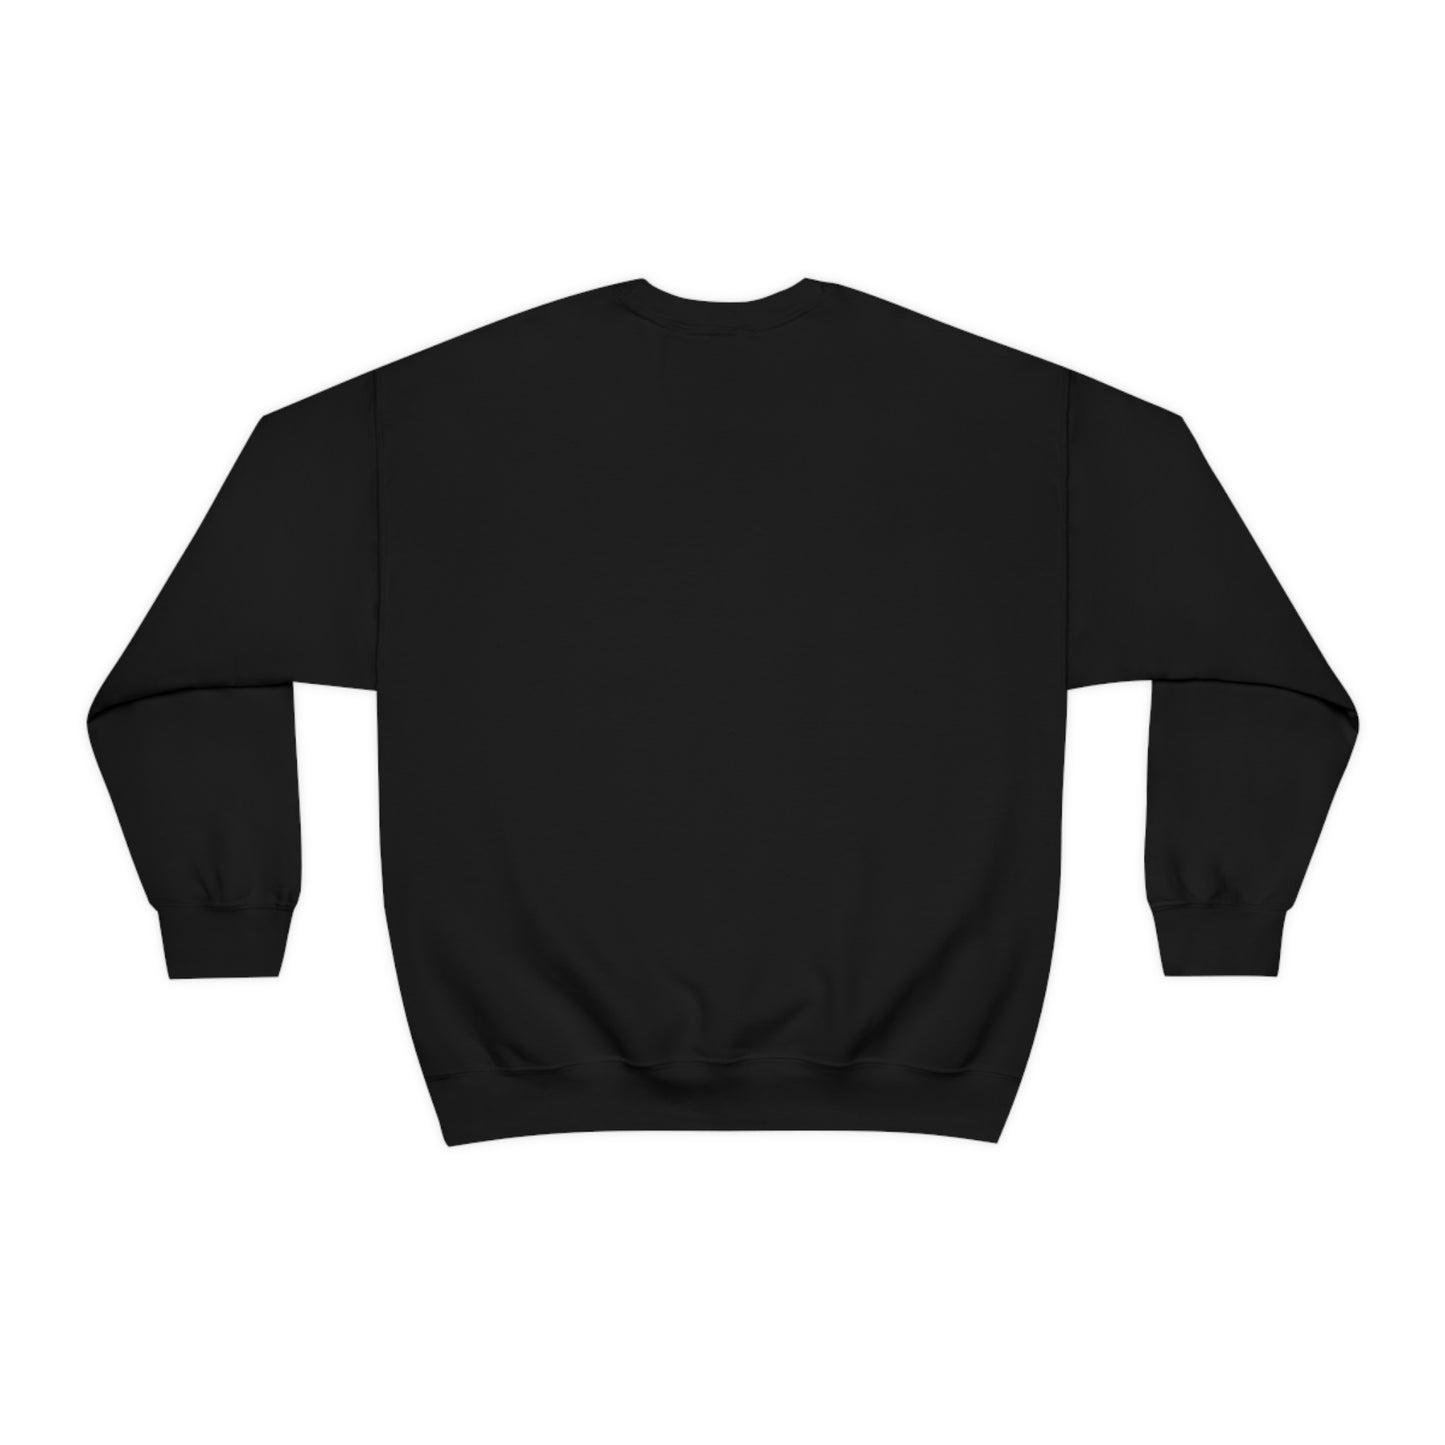 Coolest Frenchie Dad Ever Unisex Heavy Blend™ Crewneck Sweatshirt | “Happy Dog” Black Dog Tee Sweatshirts